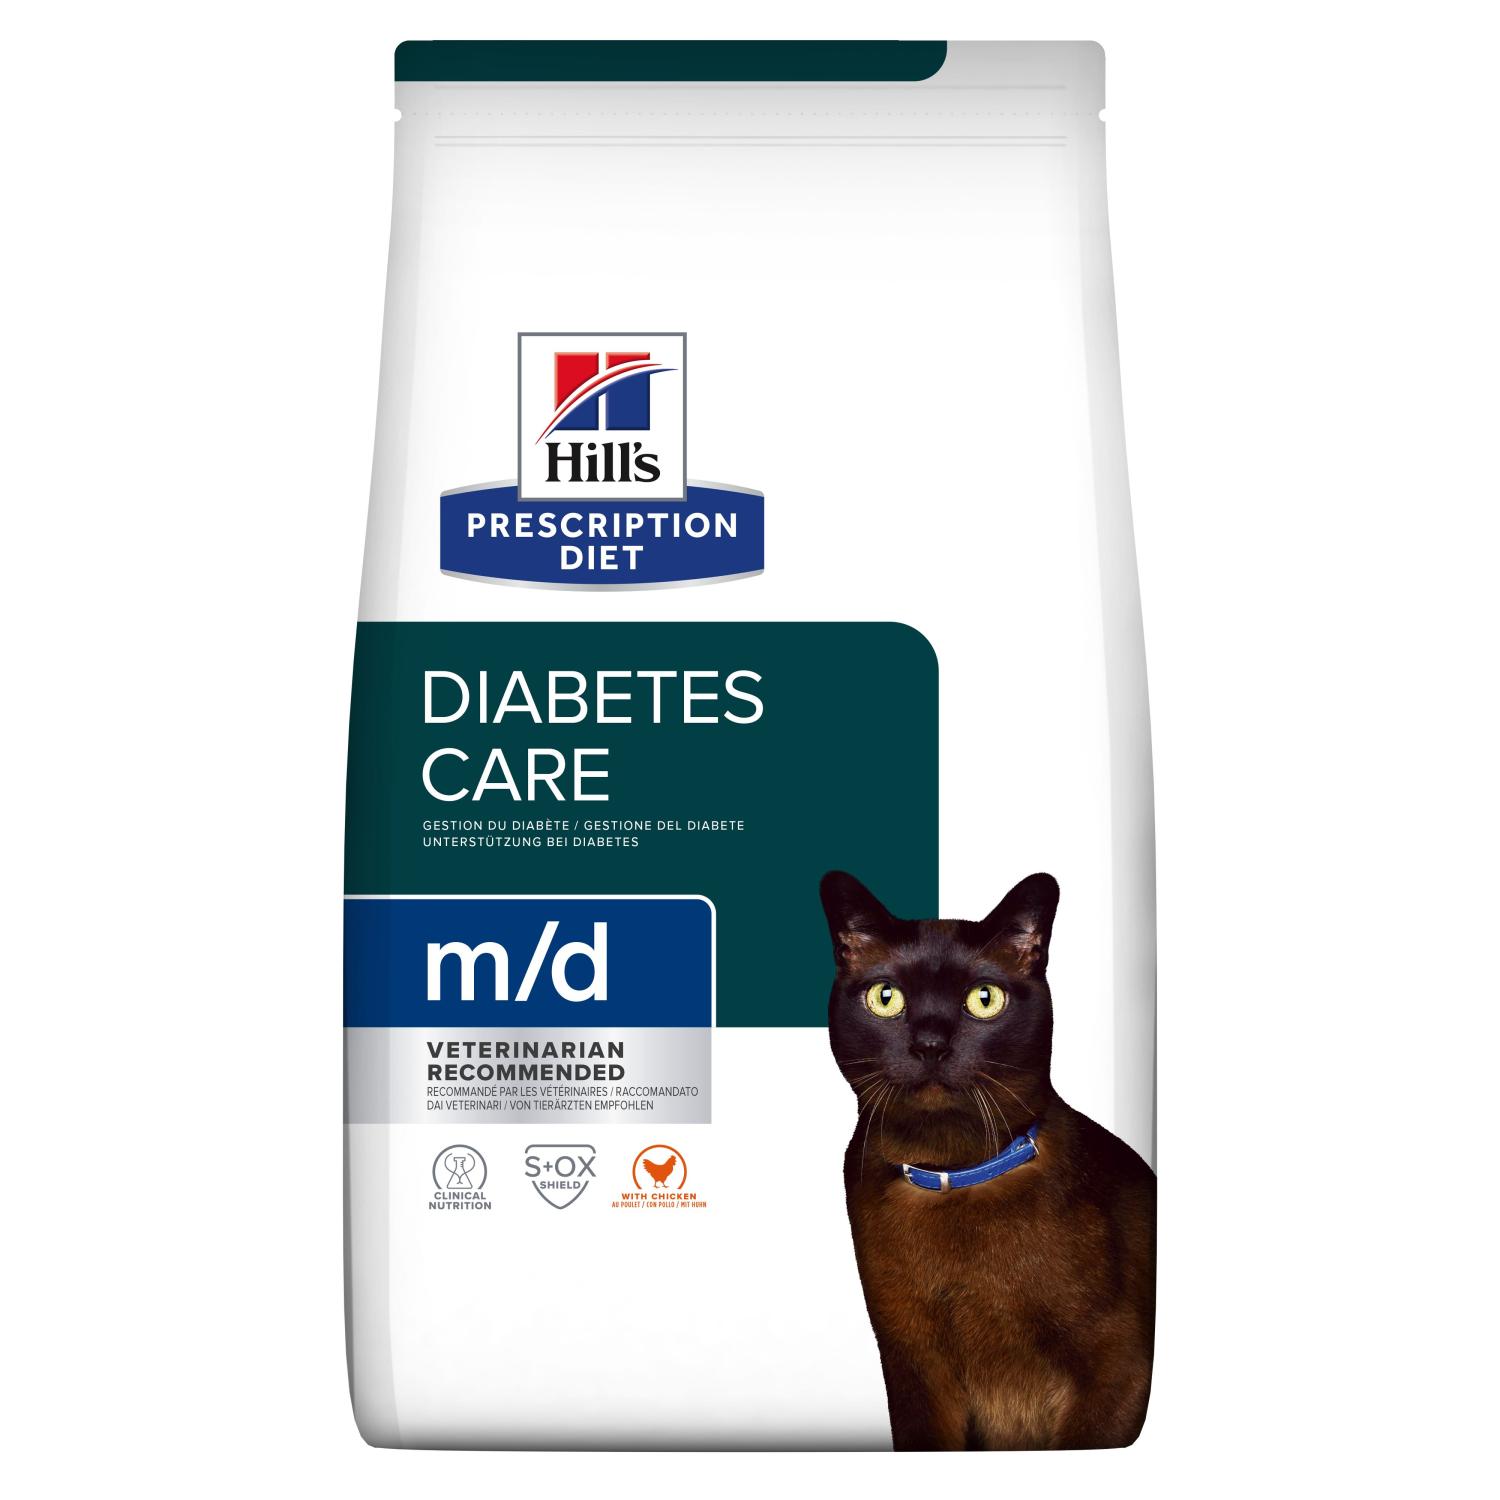 Hills m/d katt diabetic care